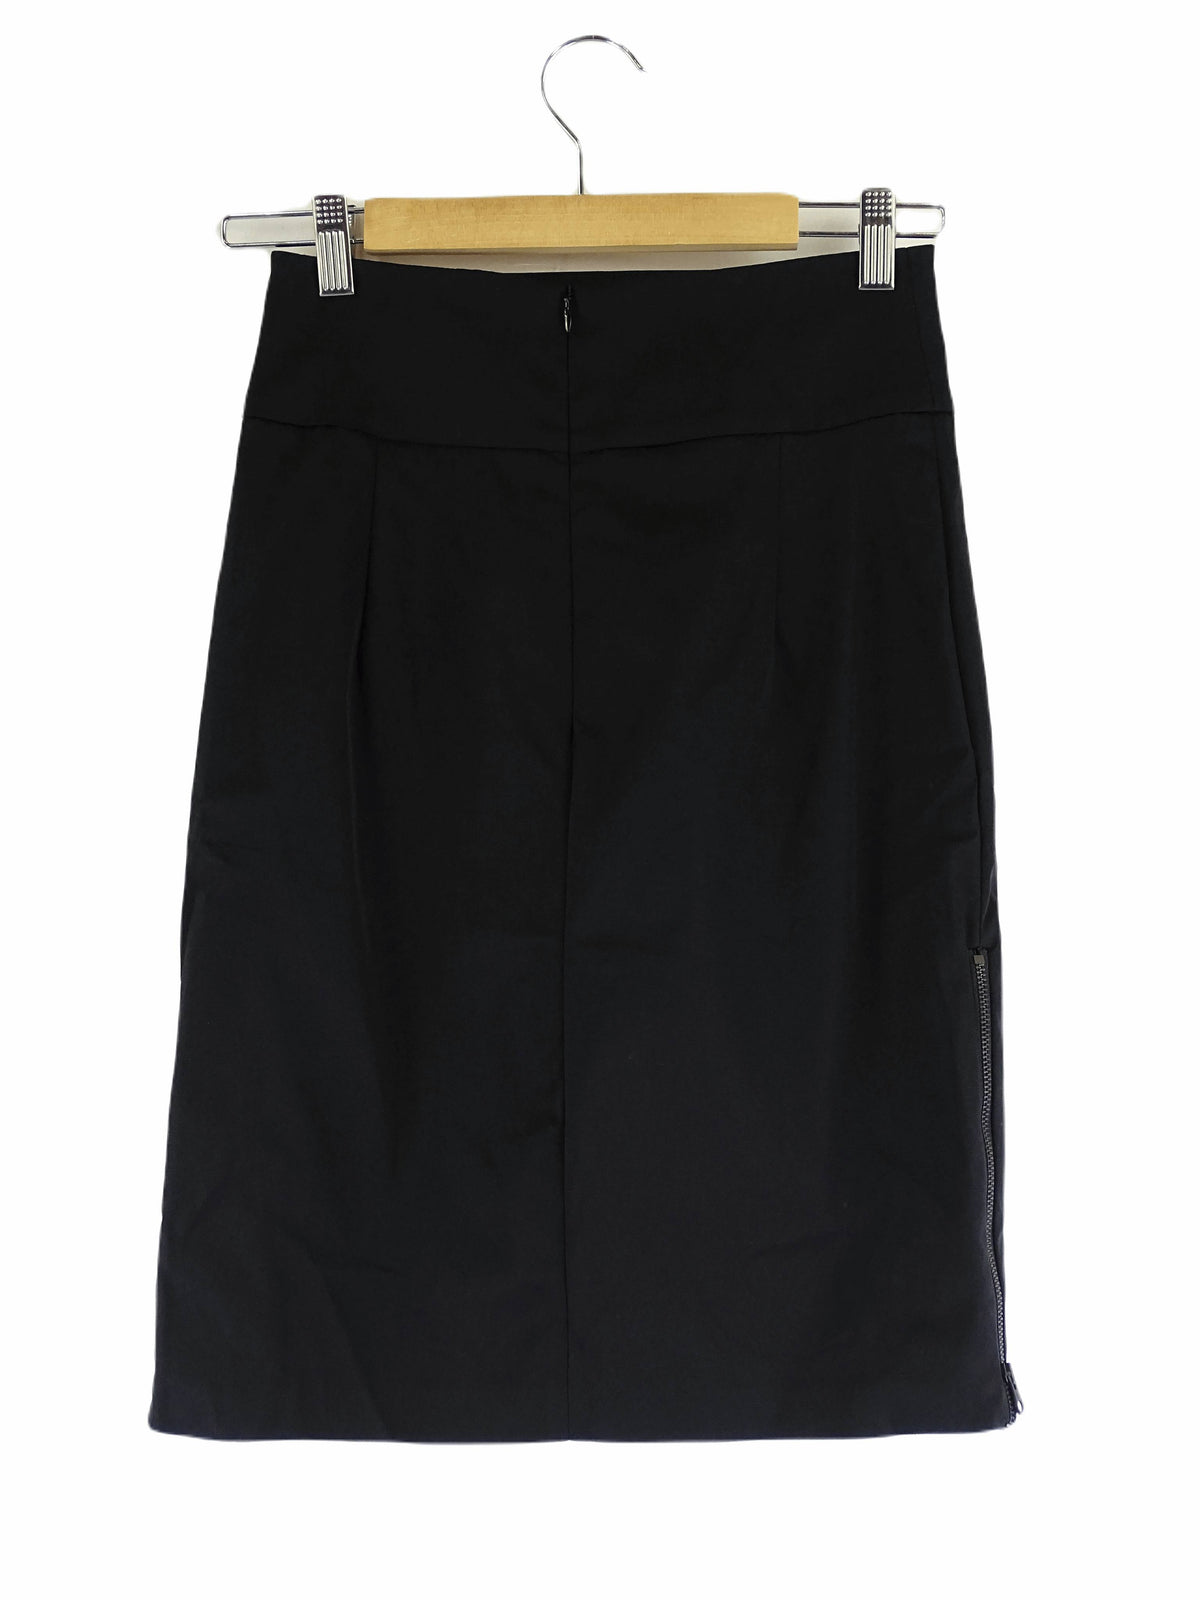 Veronika Maine Black Pencil Skirt